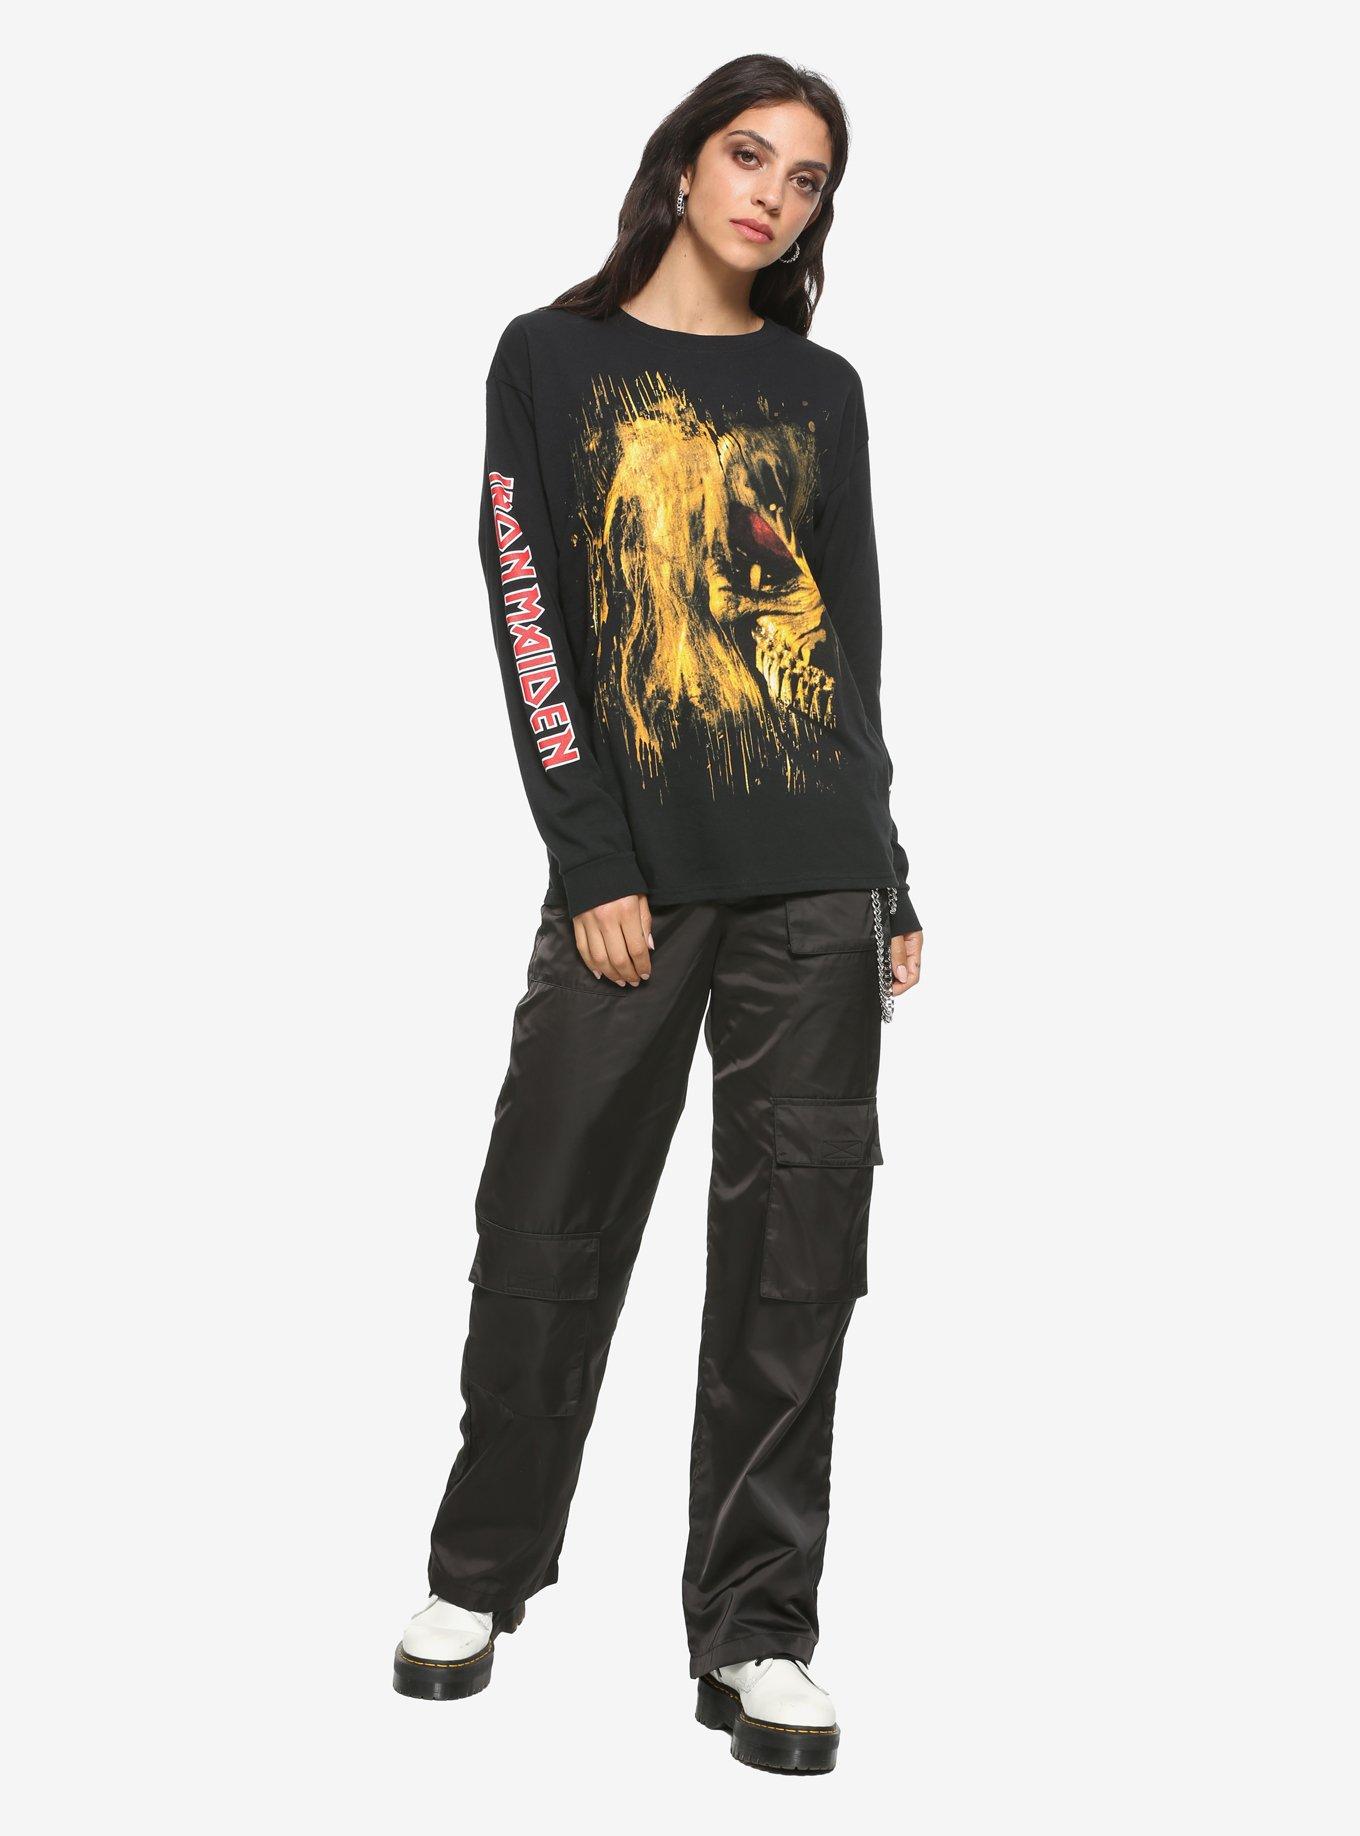 Iron Maiden Rainmaker Girls Long-Sleeve T-Shirt, BLACK, alternate